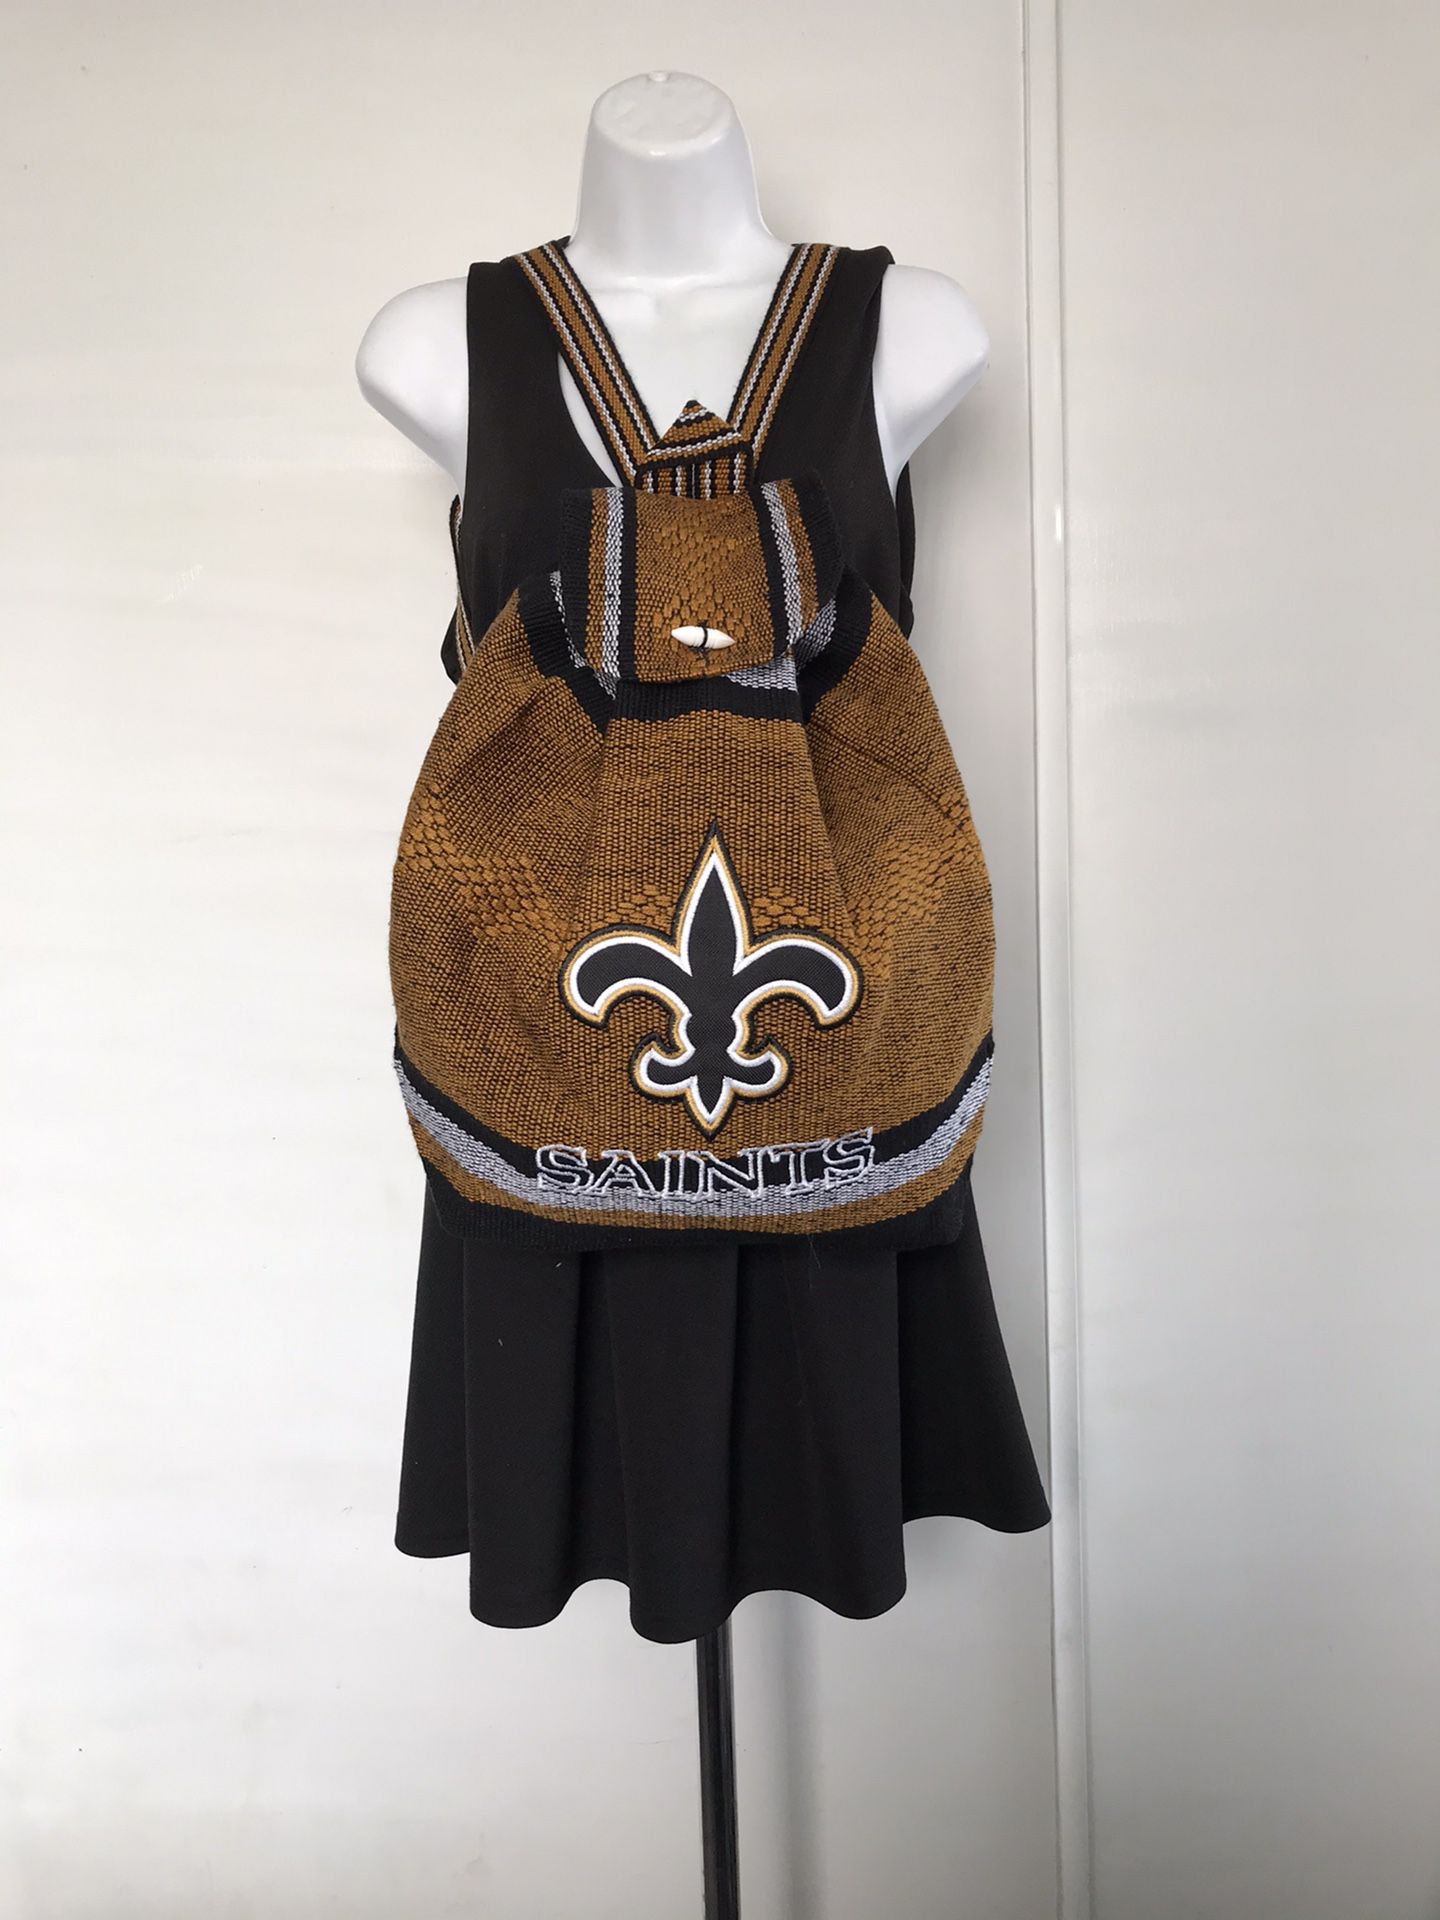 New Orleans Saints backpack